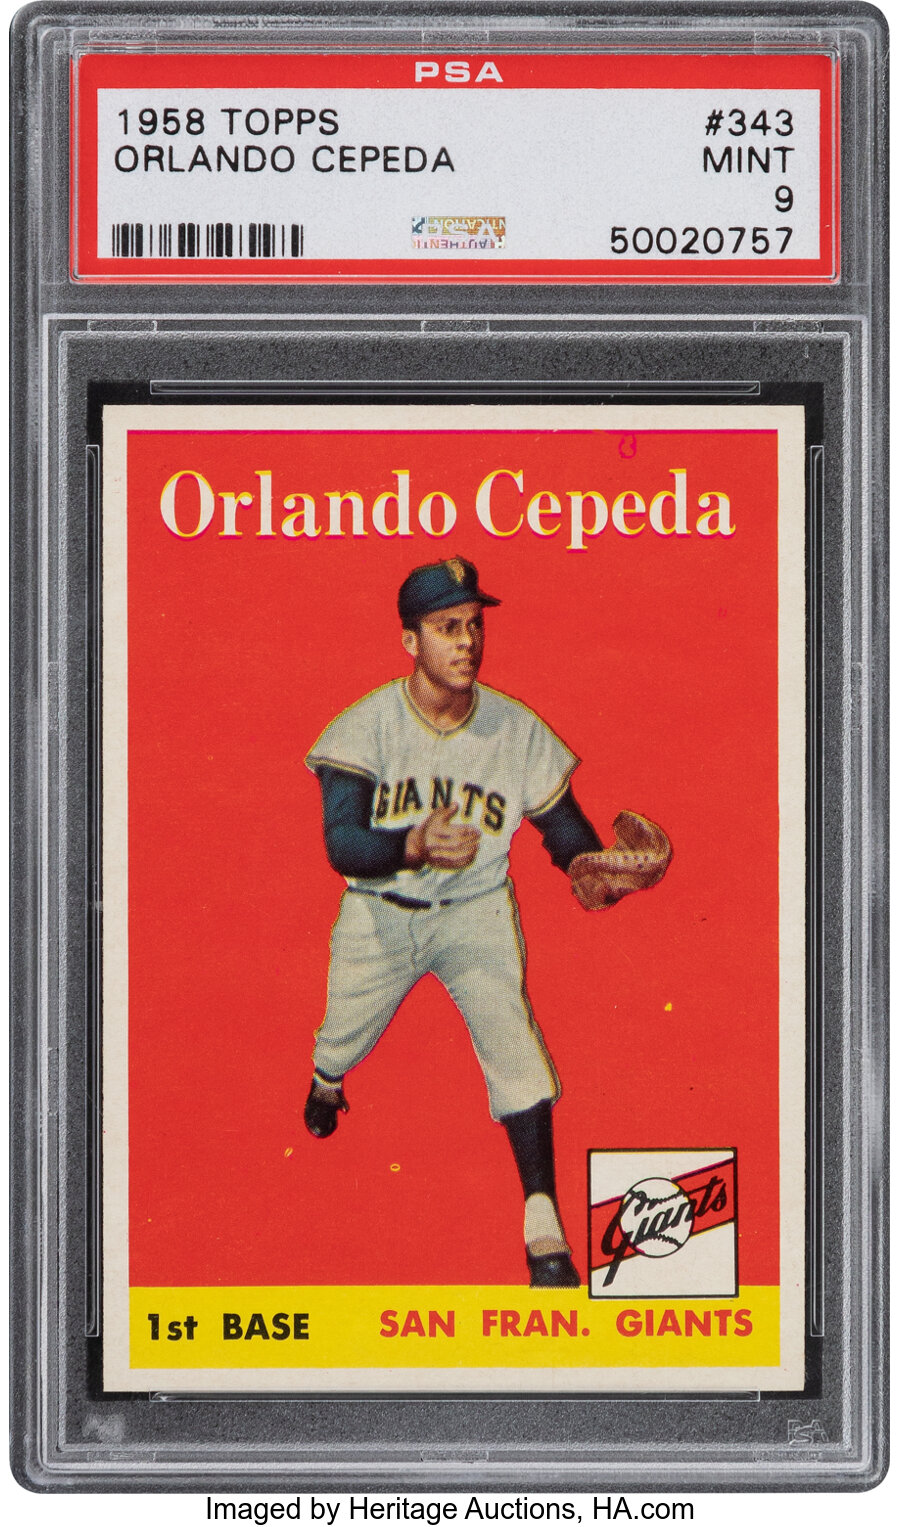 1958 Topps Orlando Cepeda #343 PSA Mint 9 - None Higher!